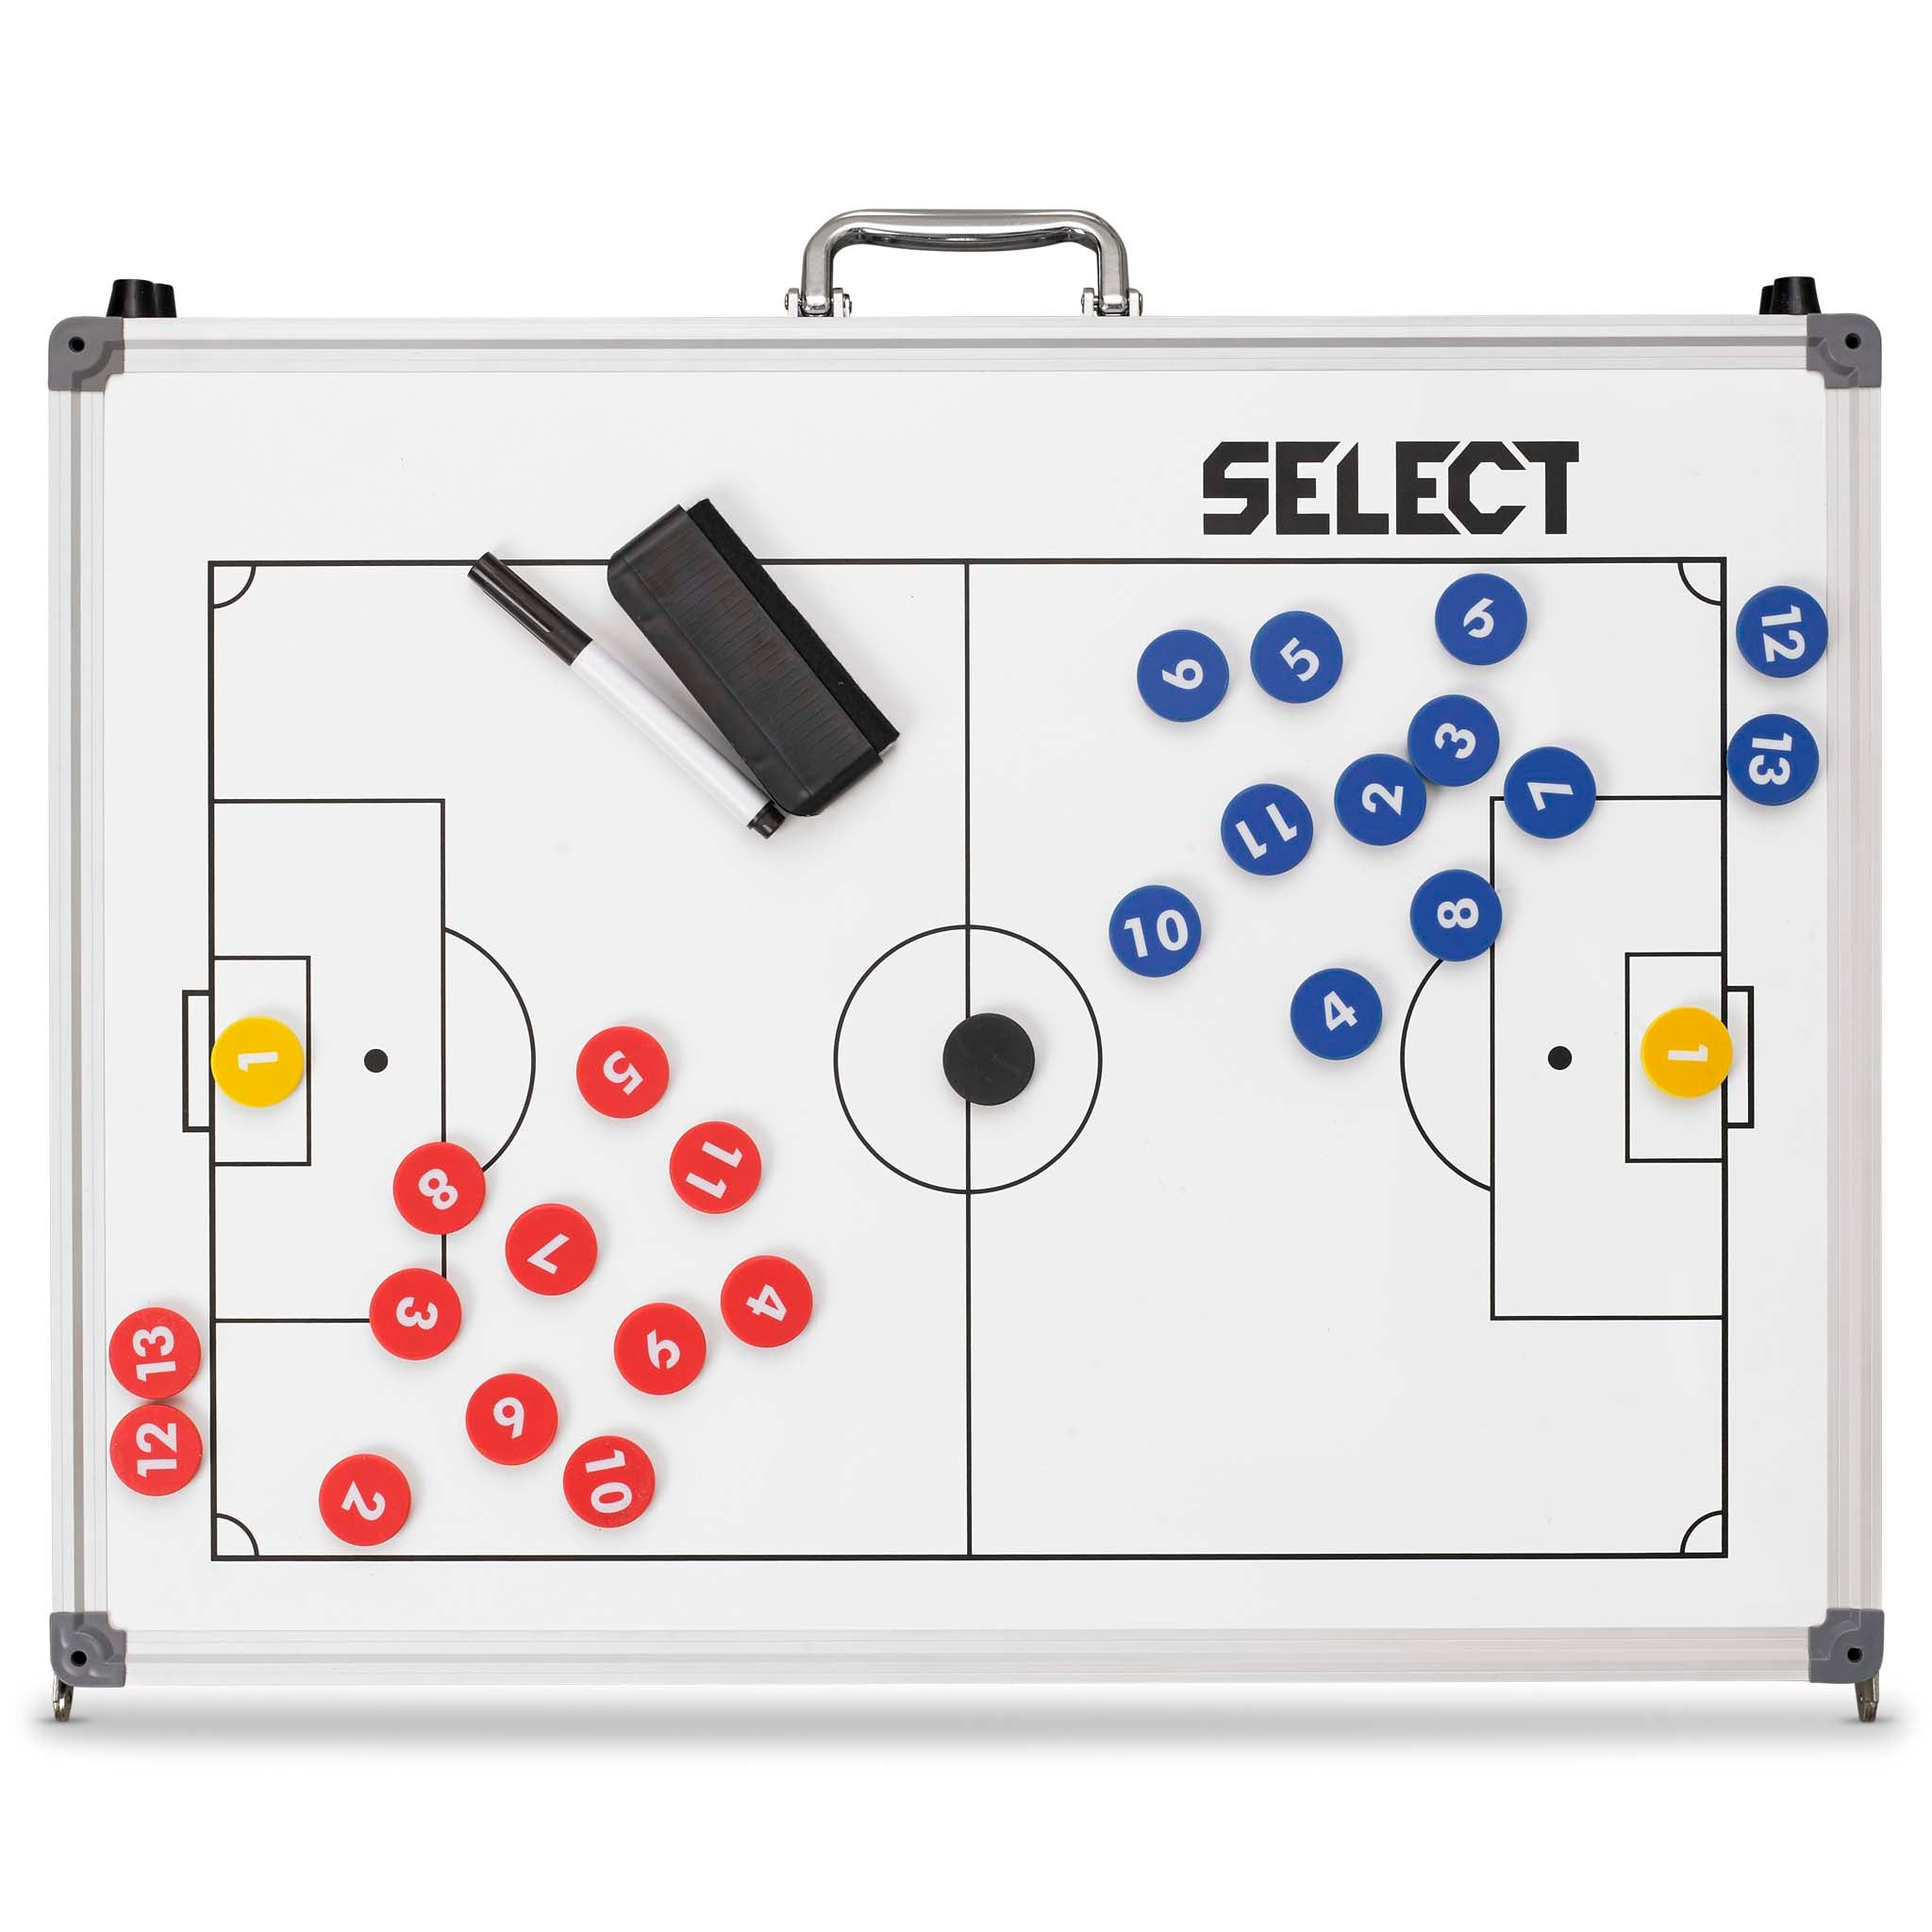 Tactics board foldable football